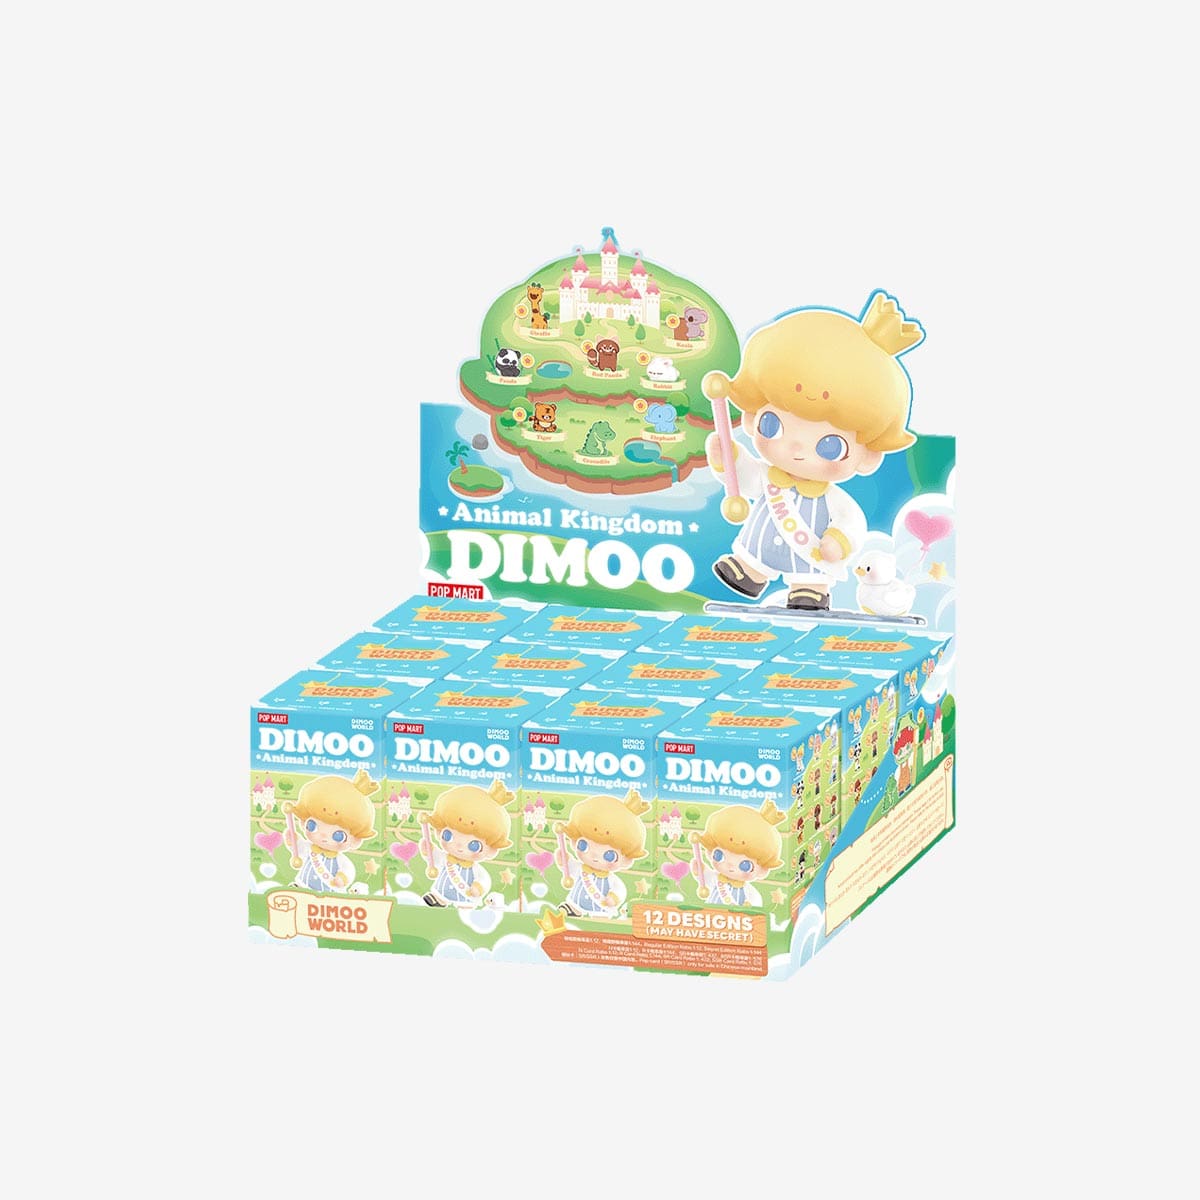 （Pre-order）DIMOO Animal Kingdom Series DIY